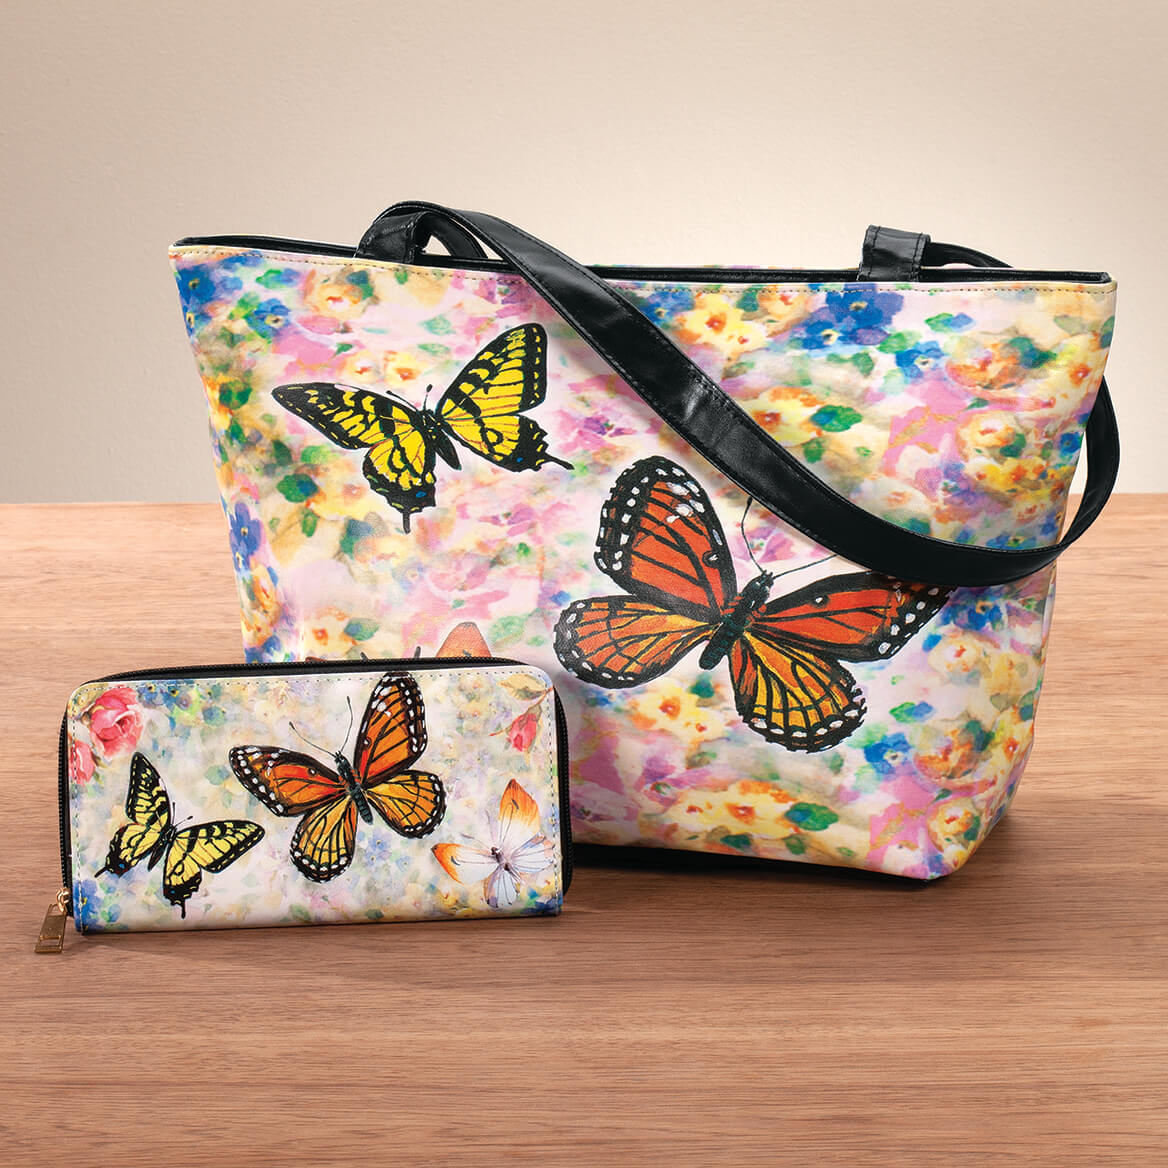 Designer Butterfly Handbag and Wallet, Women’s Shoulder Purse and Wallet Combo, | eBay